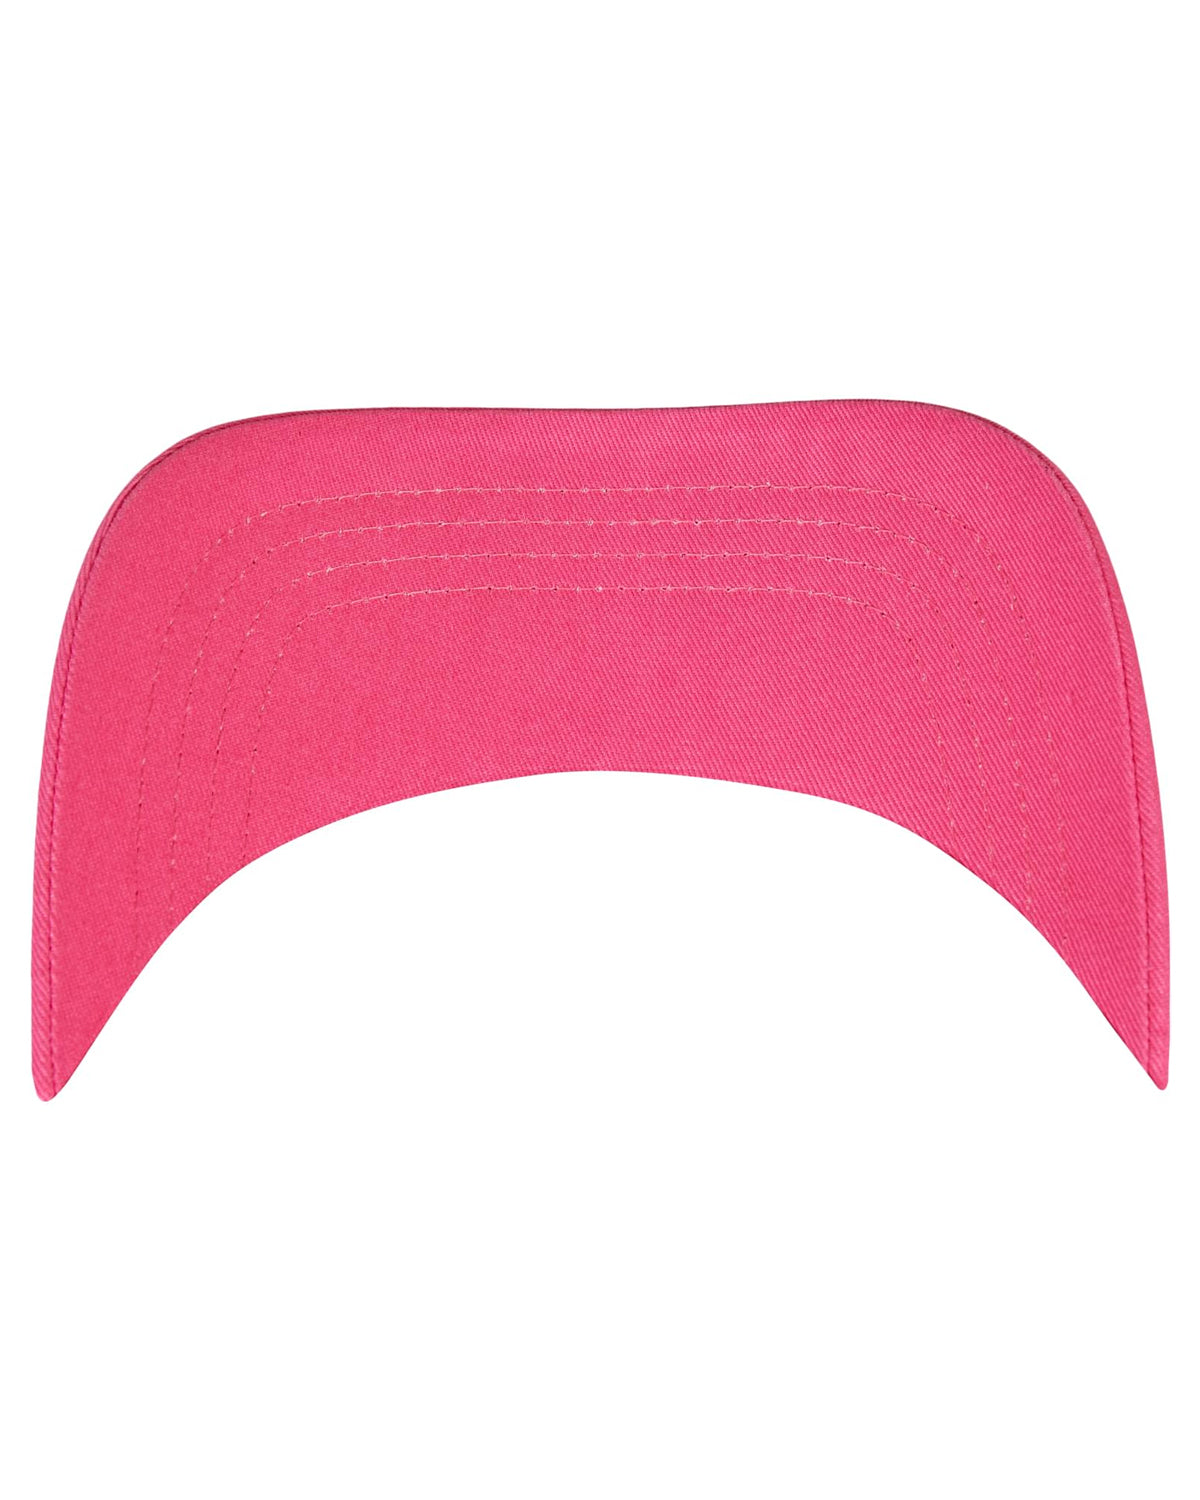 FLEXFIT Curved aurinkolippa - Pinkki